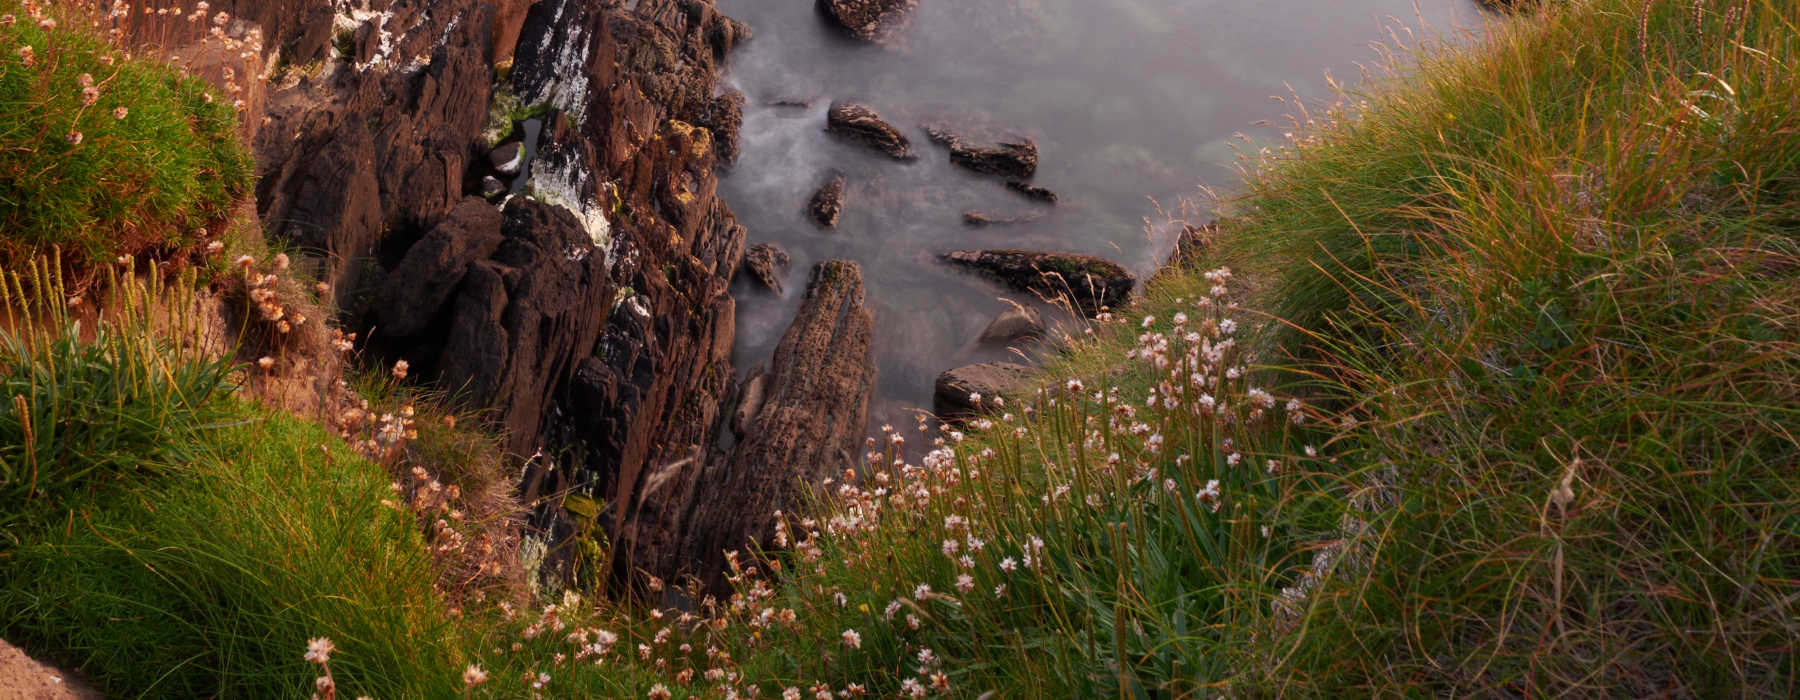 The Cliffs of Moher & County Clare<br class="hidden-md hidden-lg" /> Holidays